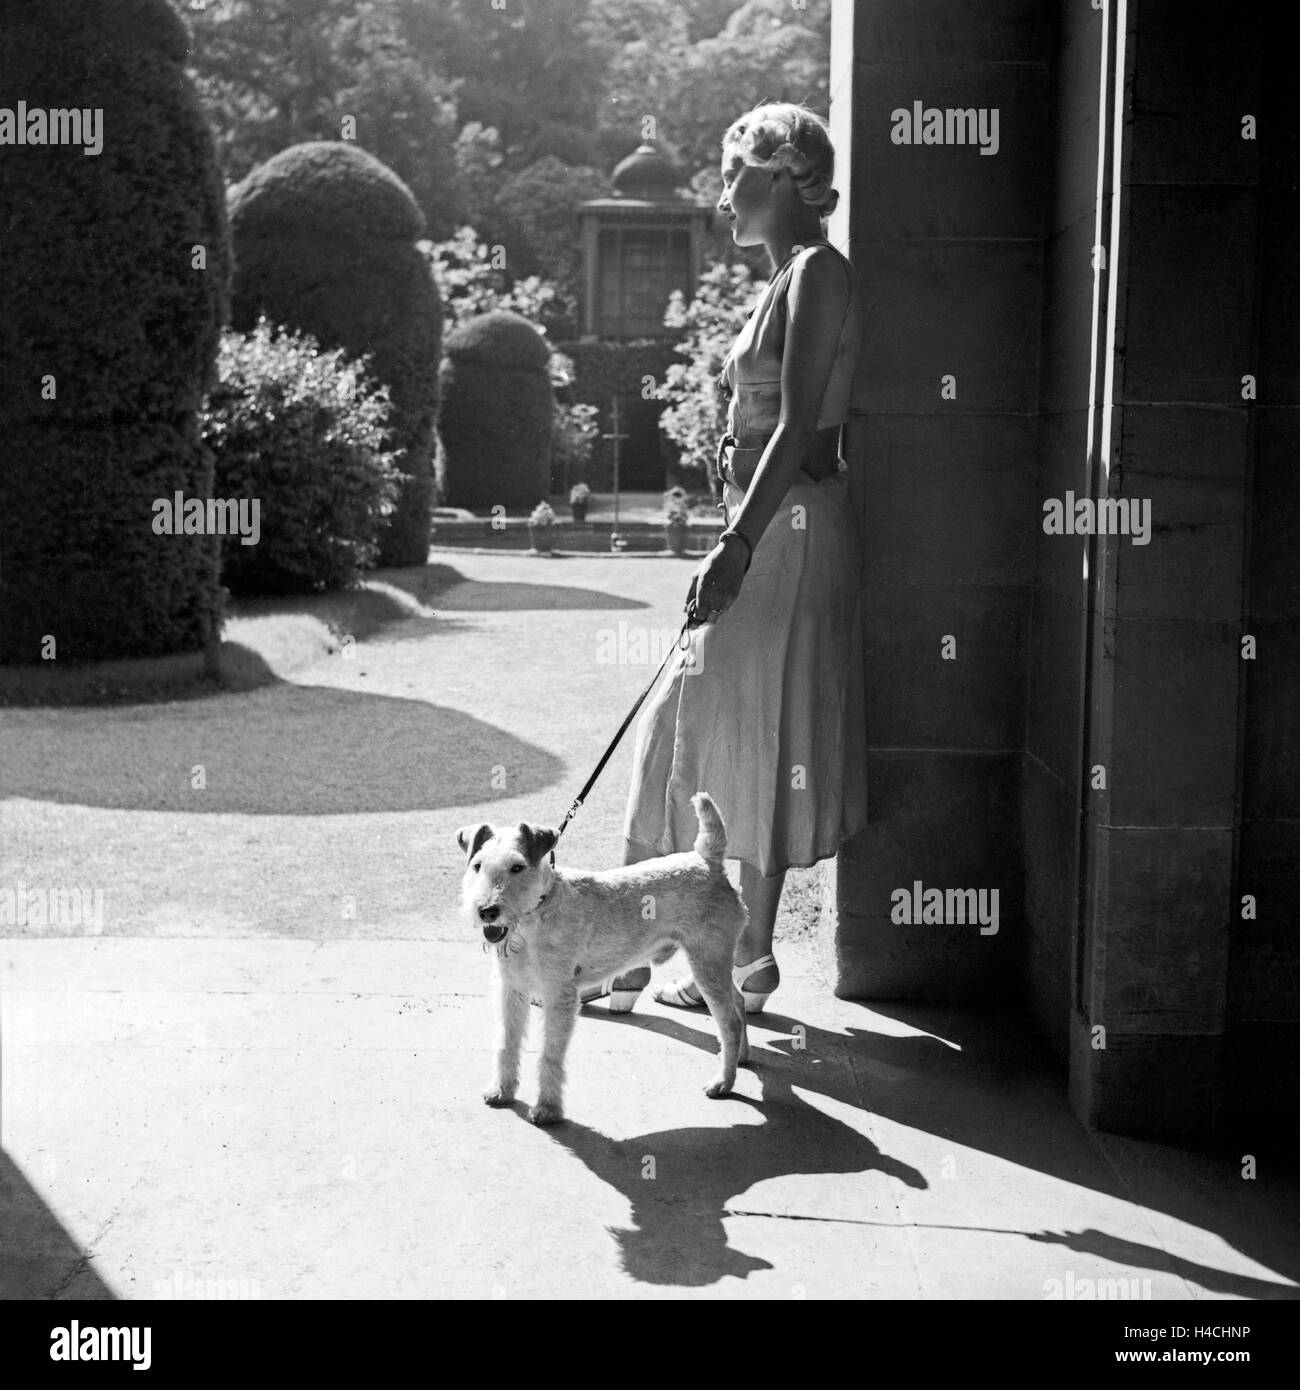 Eine Frau mit einem lehnt Foxterrier dans der Sonne à Stuttgart, Deutschland 1930er Jahre. Une femme avec son fox-terrier dans le soleil à Stuttgart, Allemagne 1930. Banque D'Images